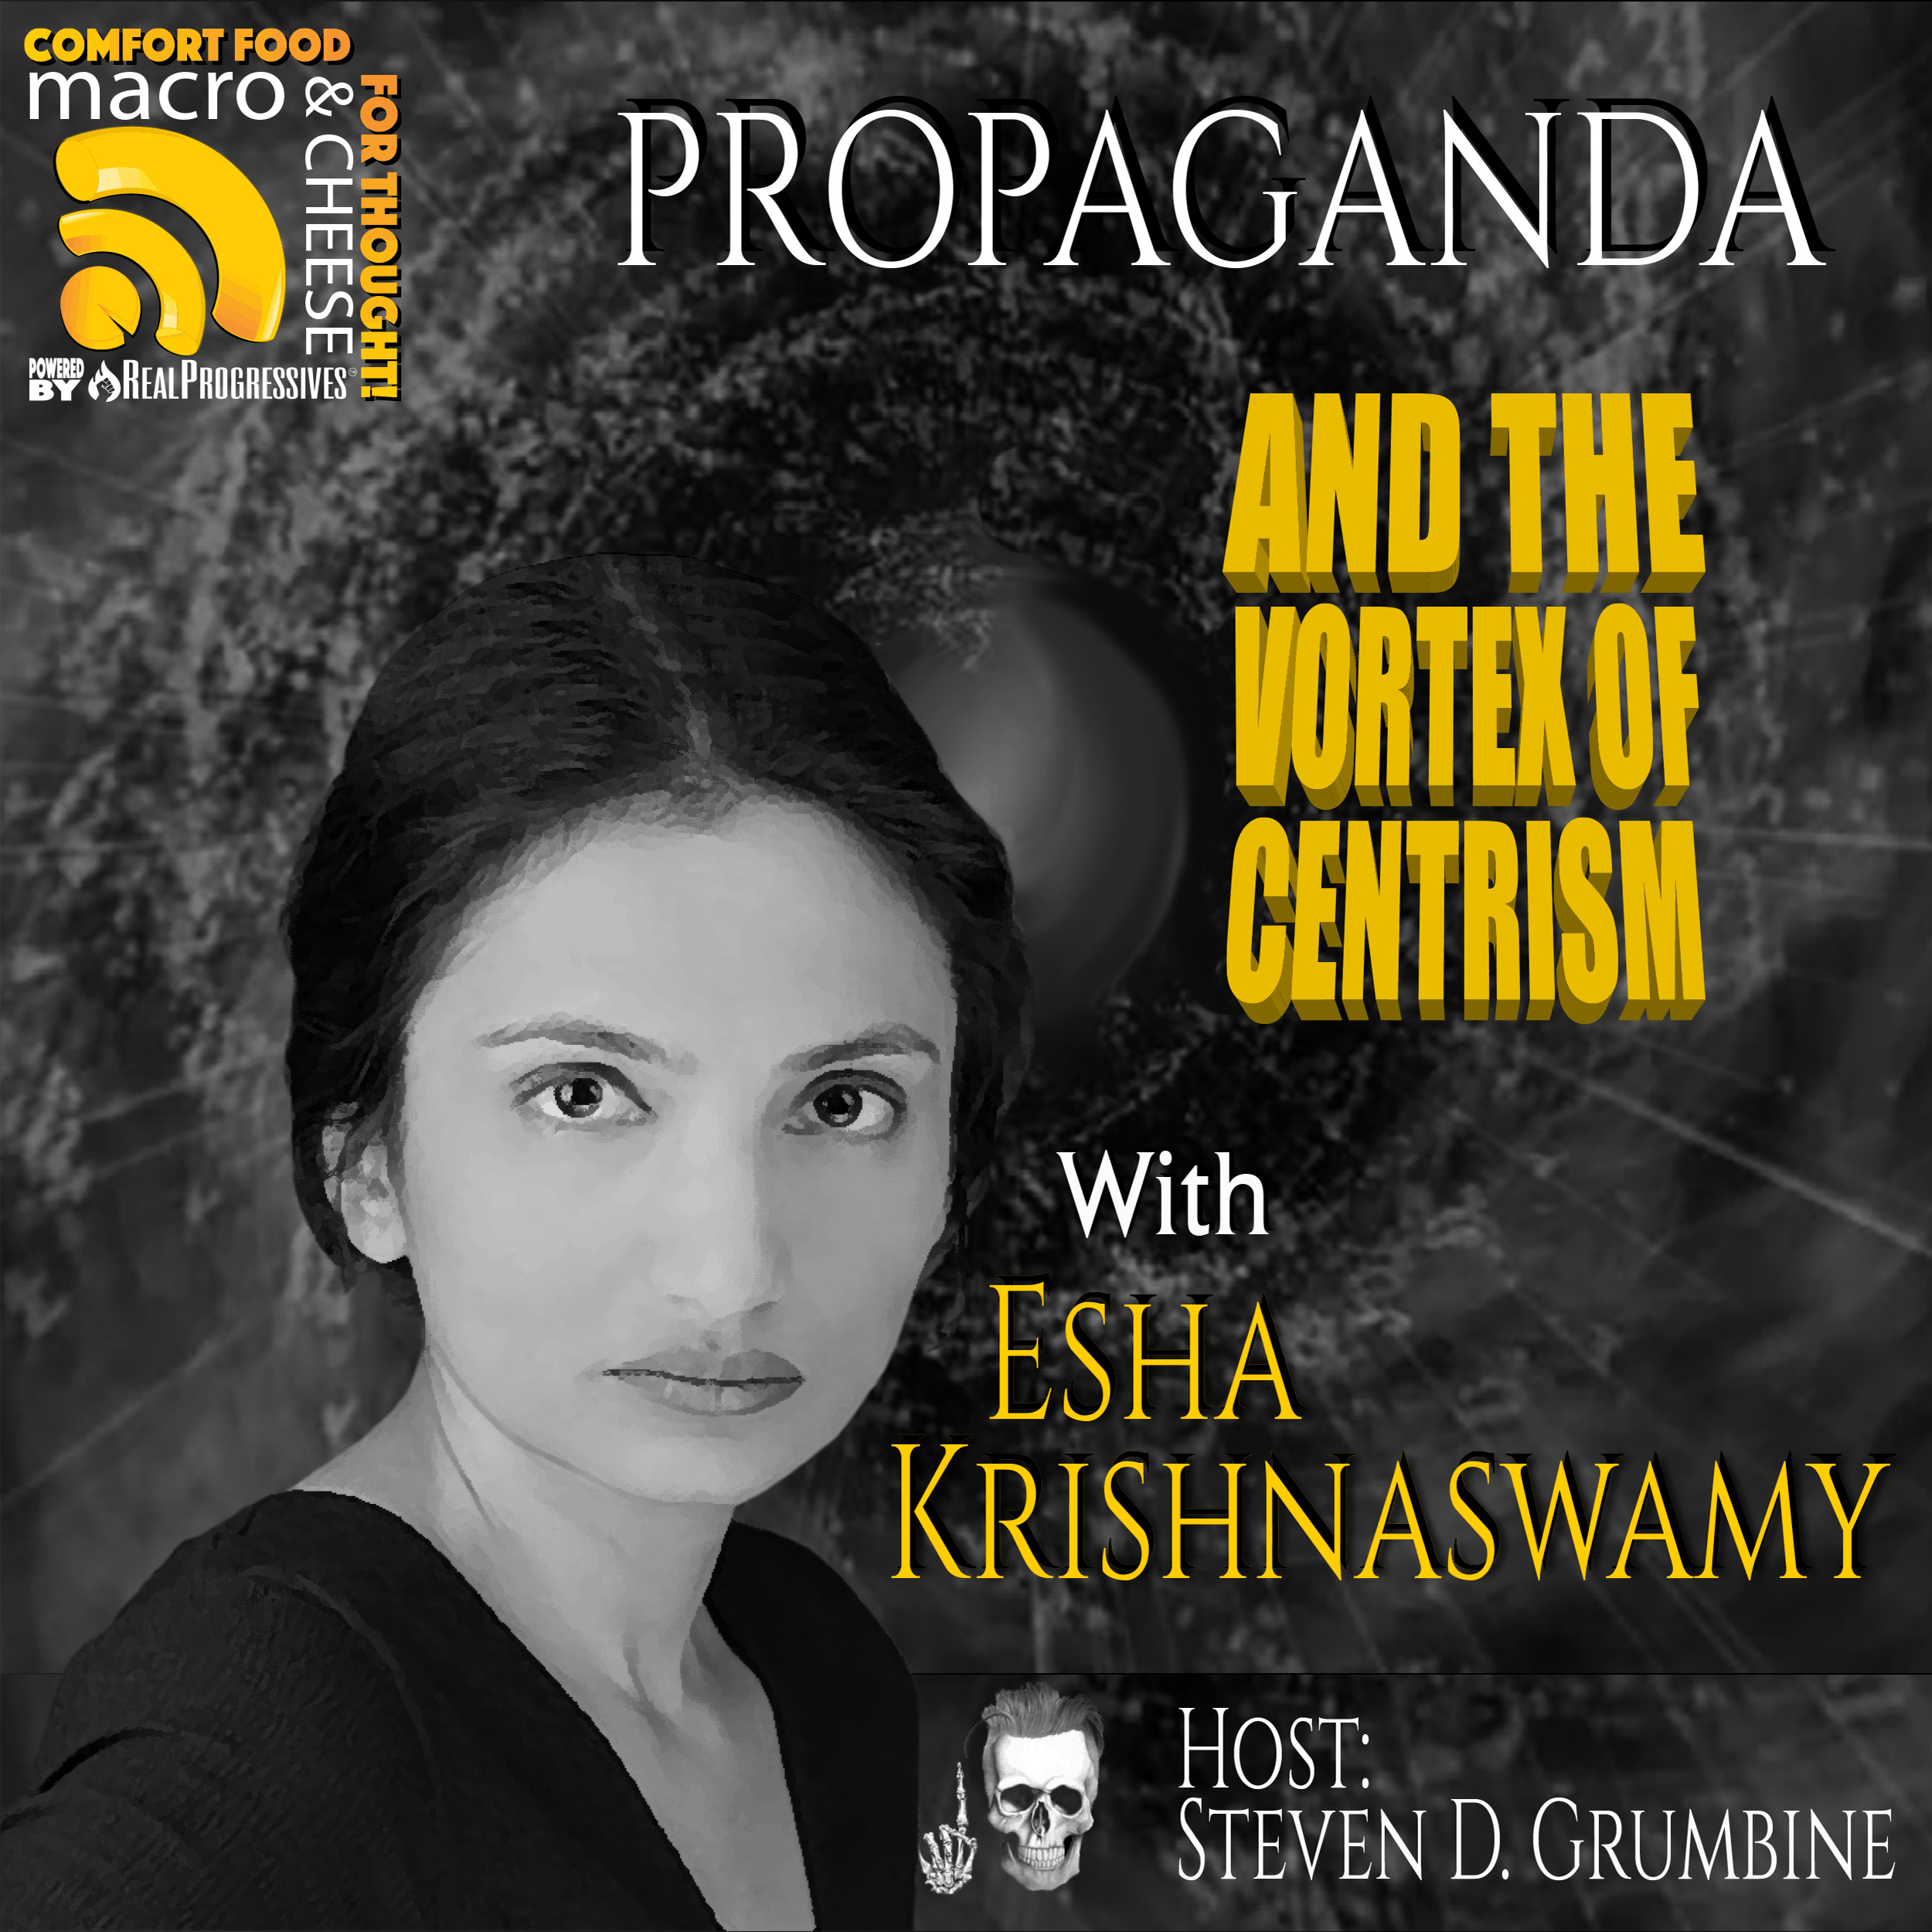 Episode 92 - Propaganda and the Vortex of Centrism with Esha Krishnaswamy